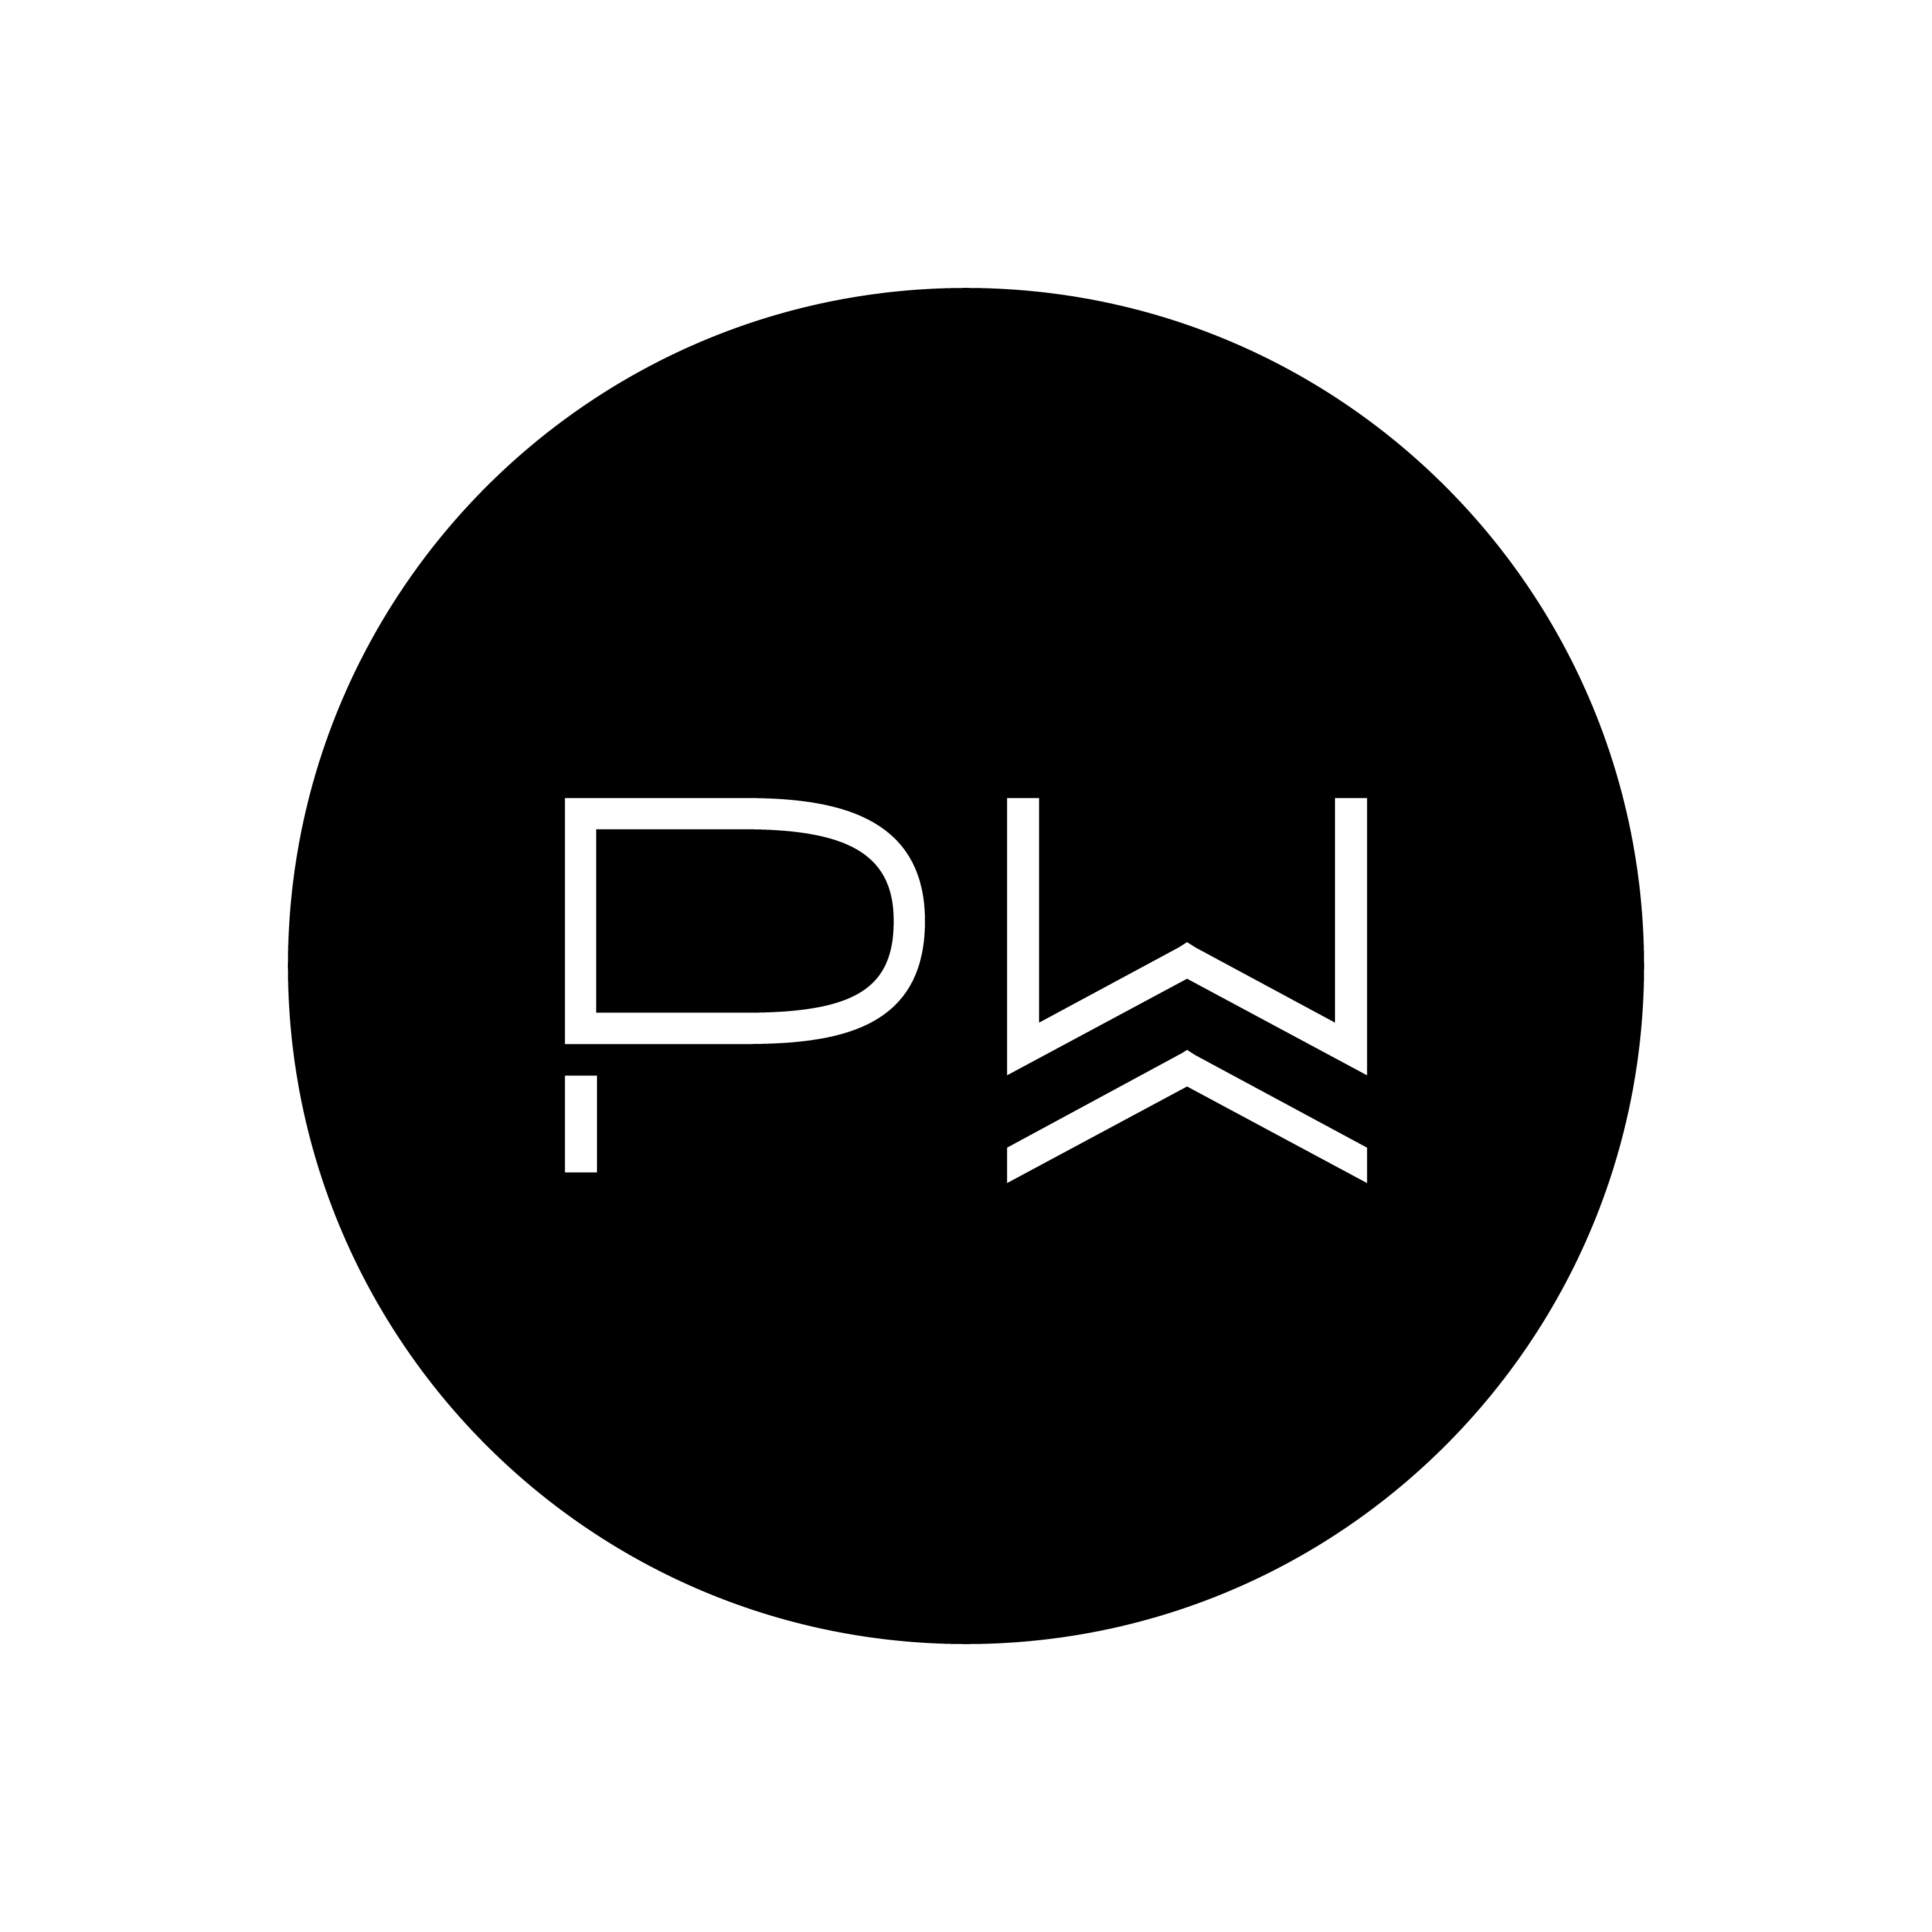 paulinawiktorska strona logo